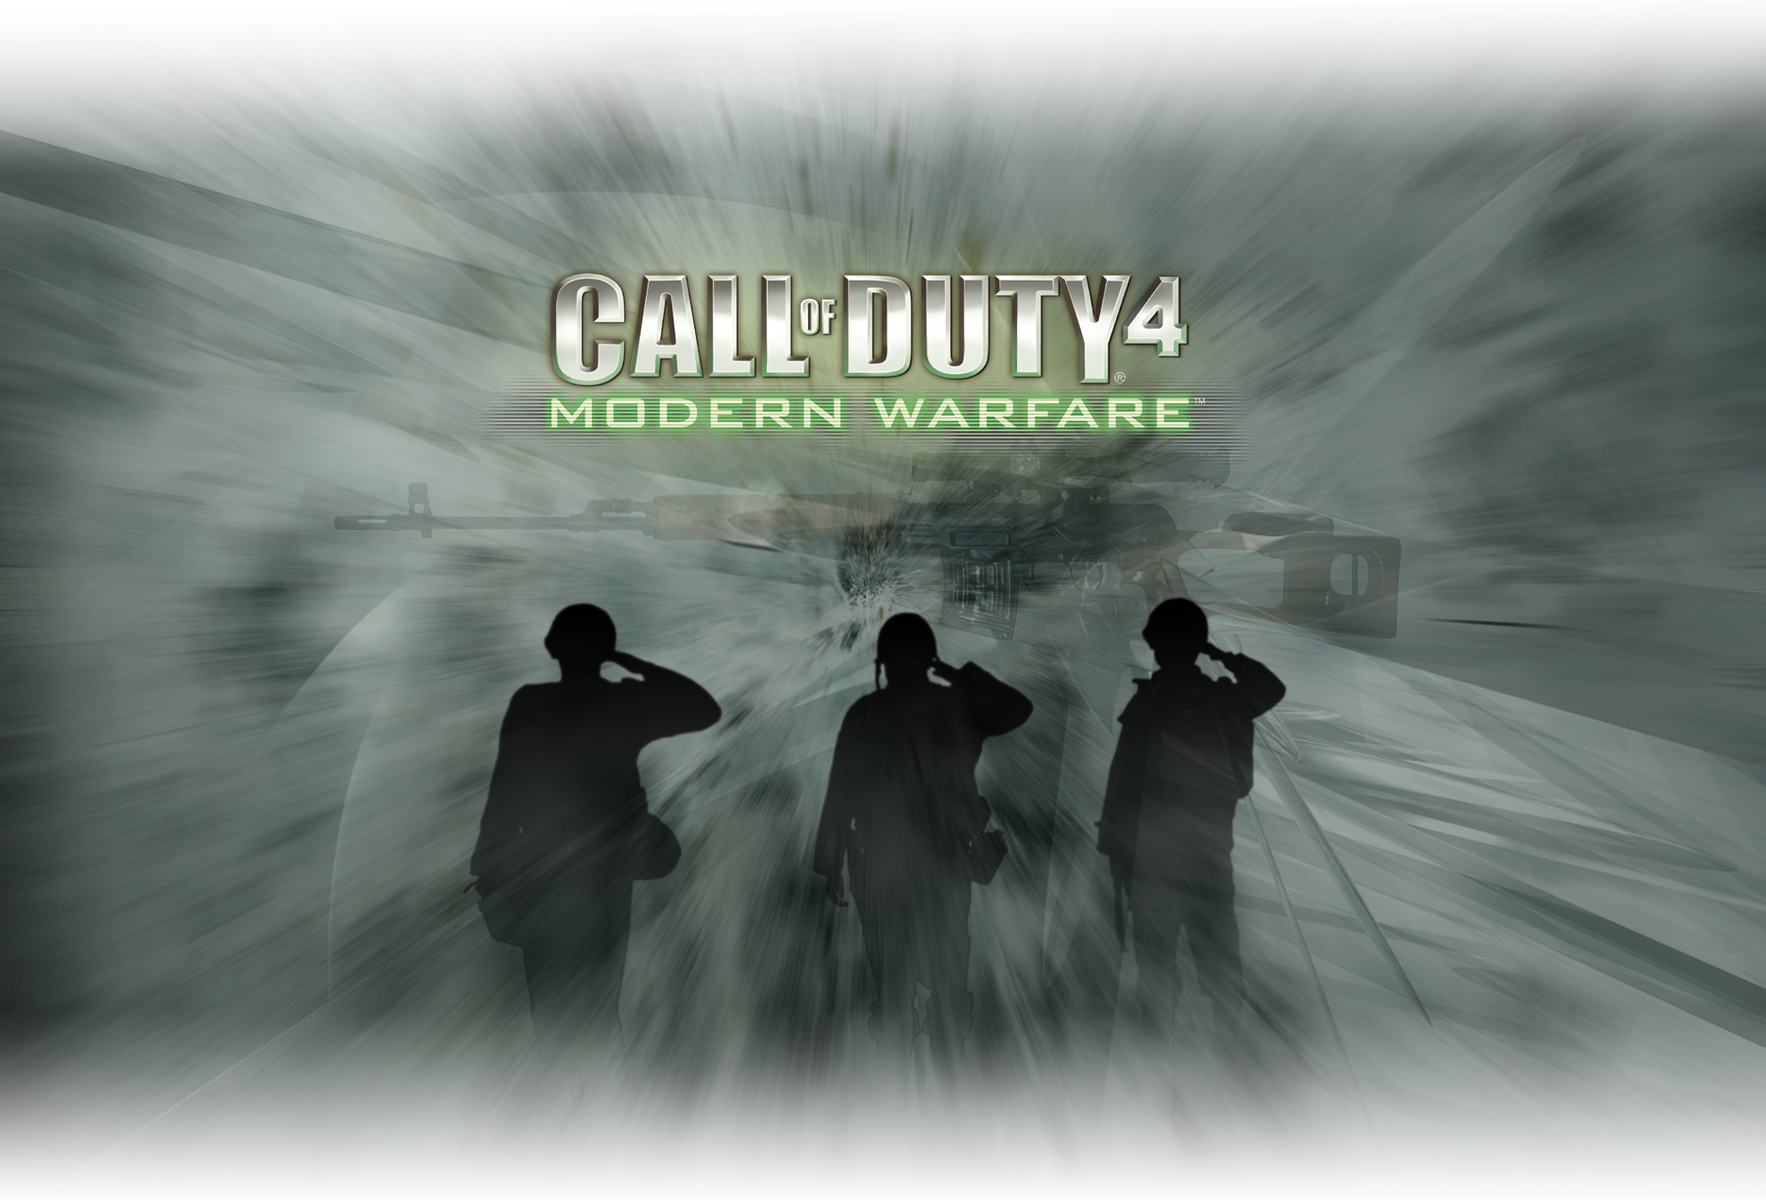 Call of Duty 4 wallpaper by Bull53Y3 on DeviantArt